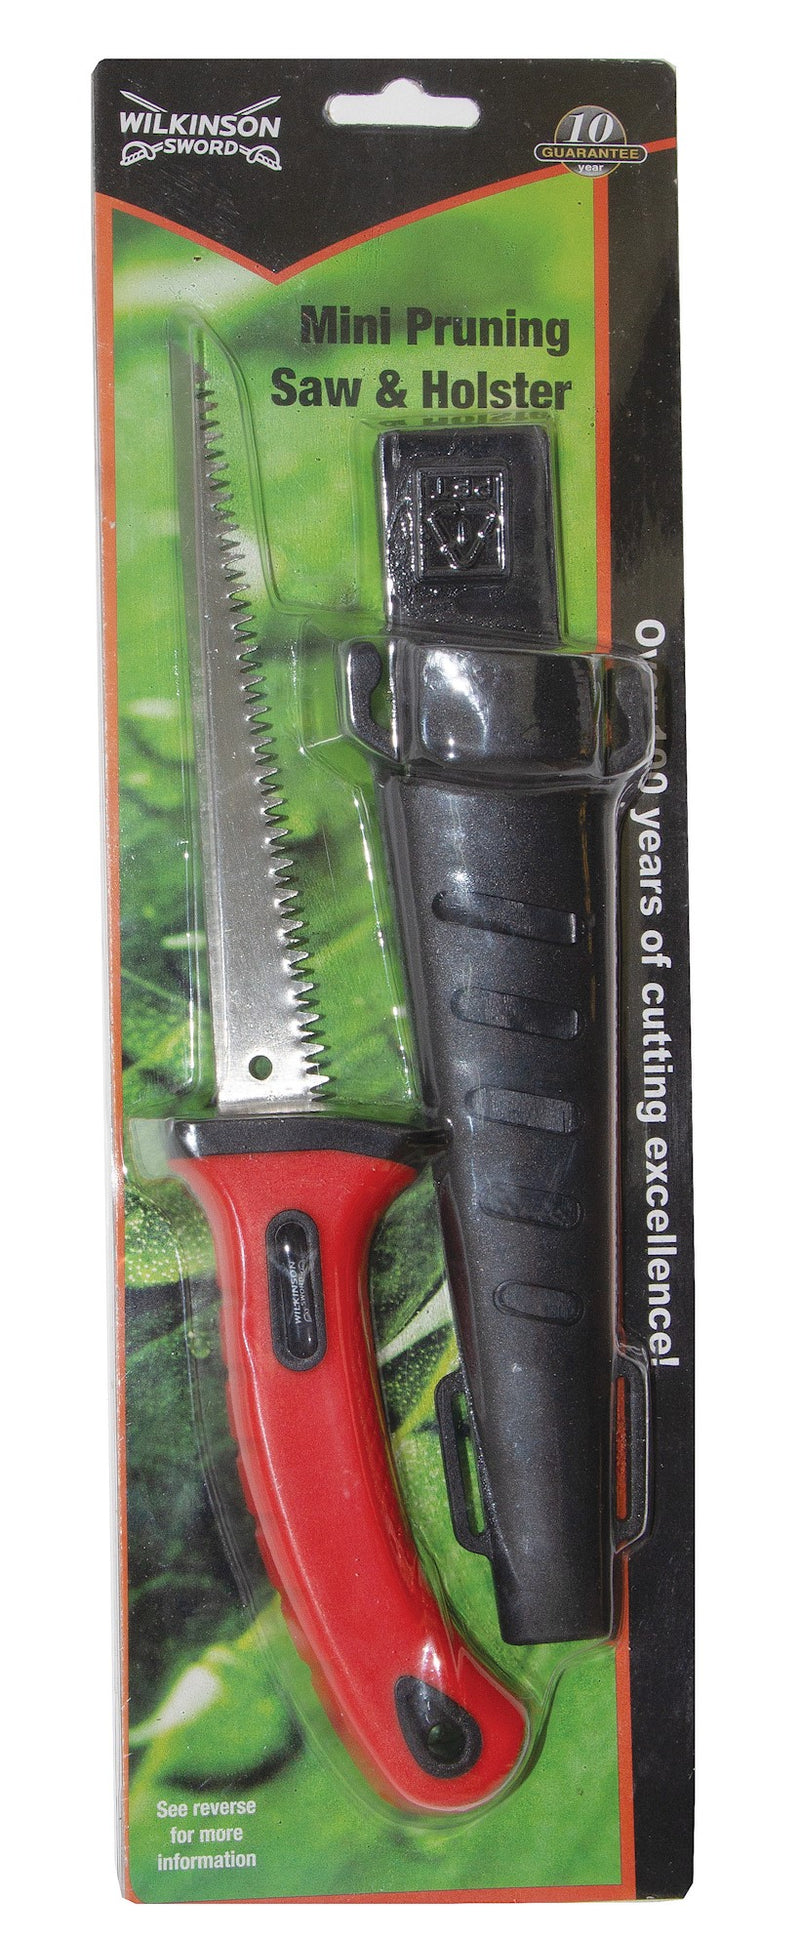 Wilkinson Sword Mini Pruning Saw & Holster